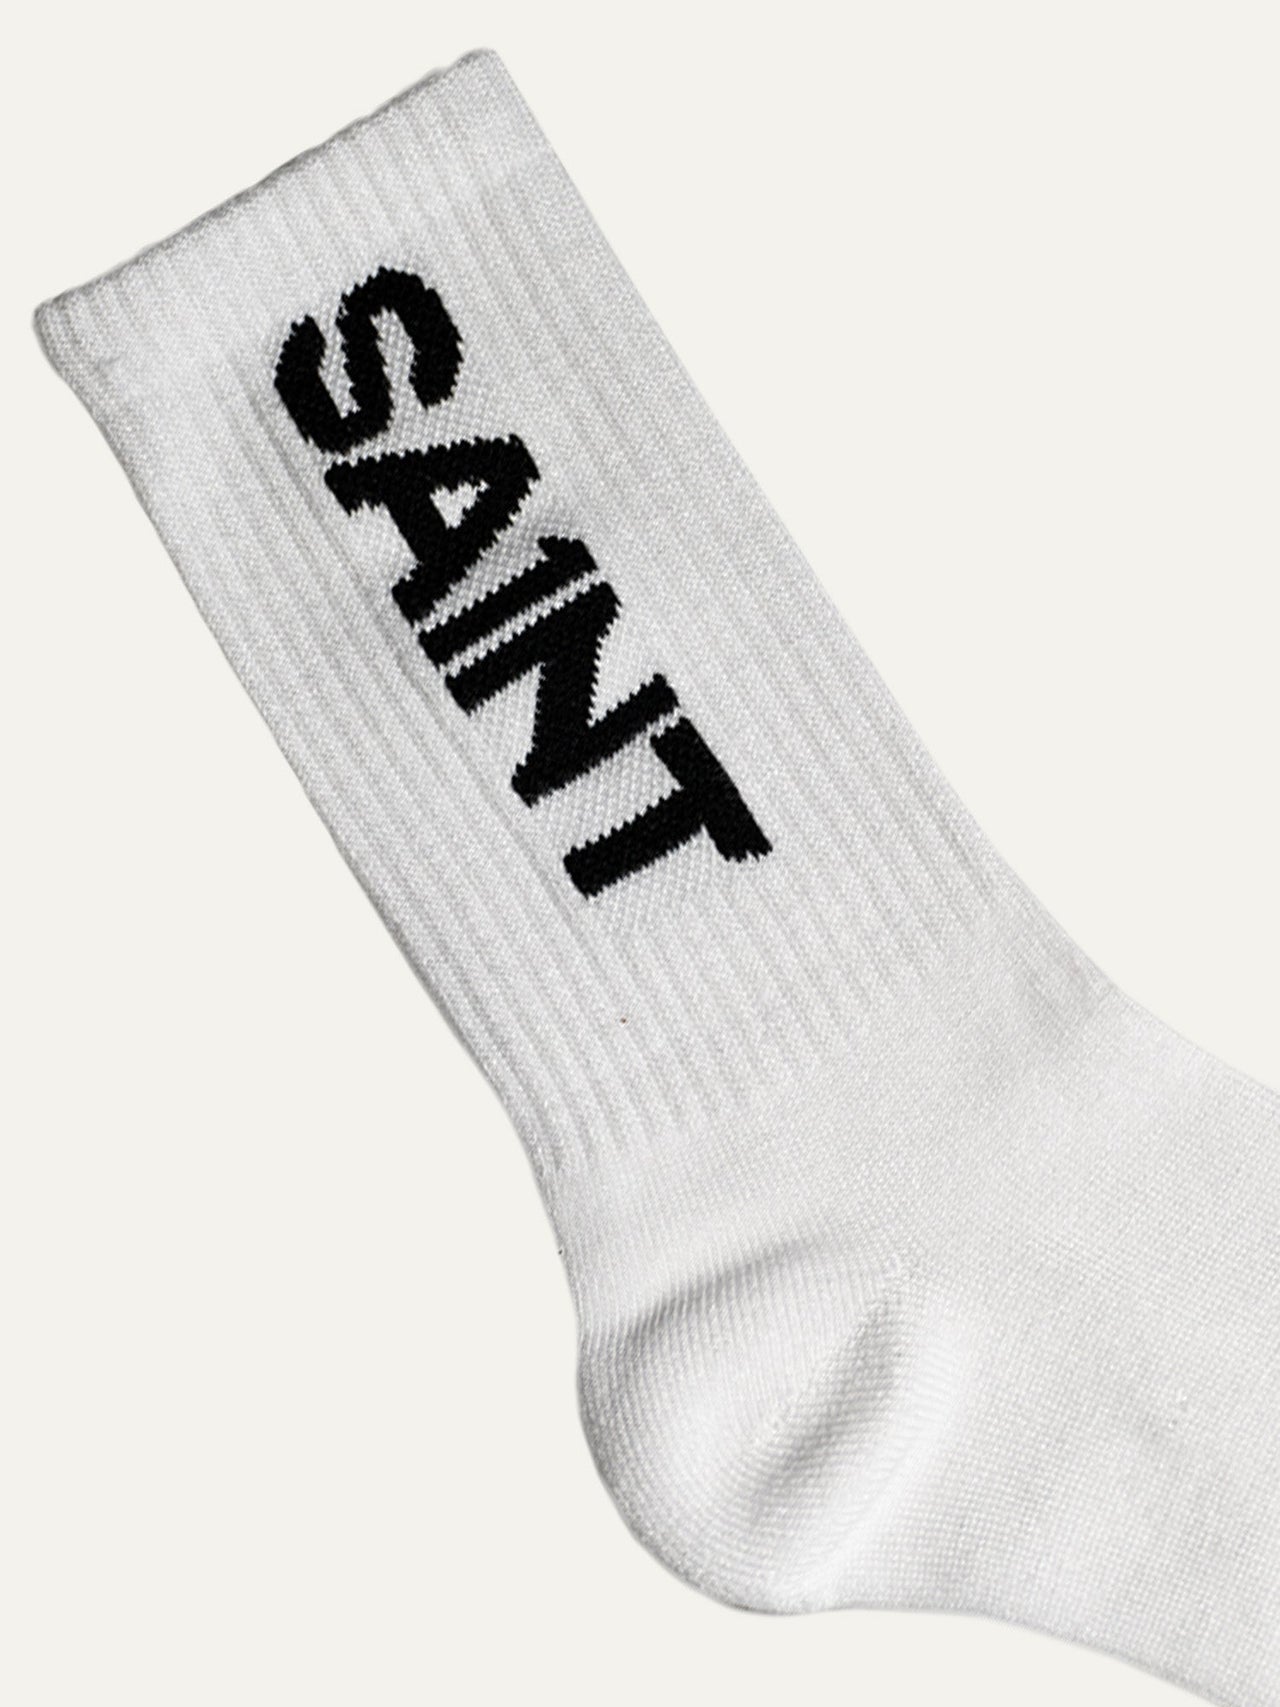 SA1NT Bamboo Crew Socks - 1 pack - White - Saint USA